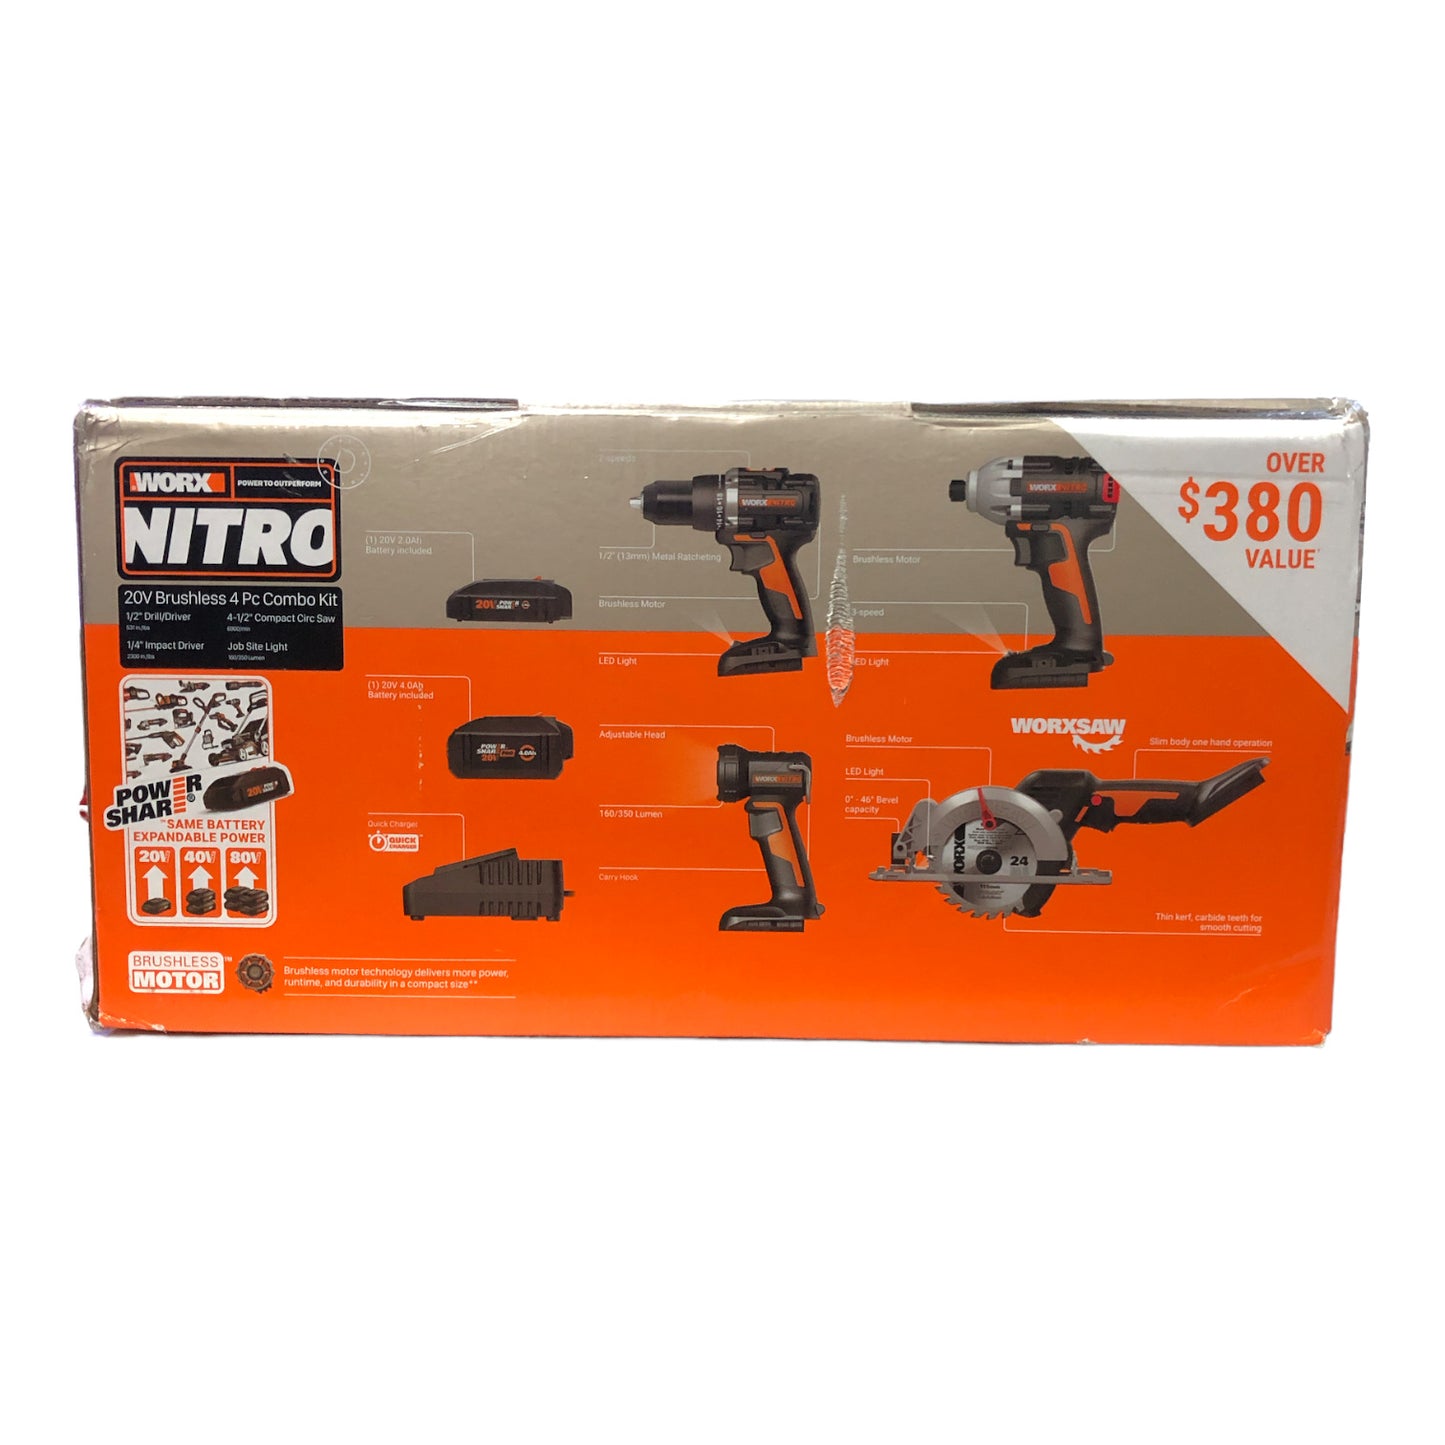 WORX NITRO 20V Brushless 4-Tool Combo Kit (Impact, Drill, Circ Saw, Light)